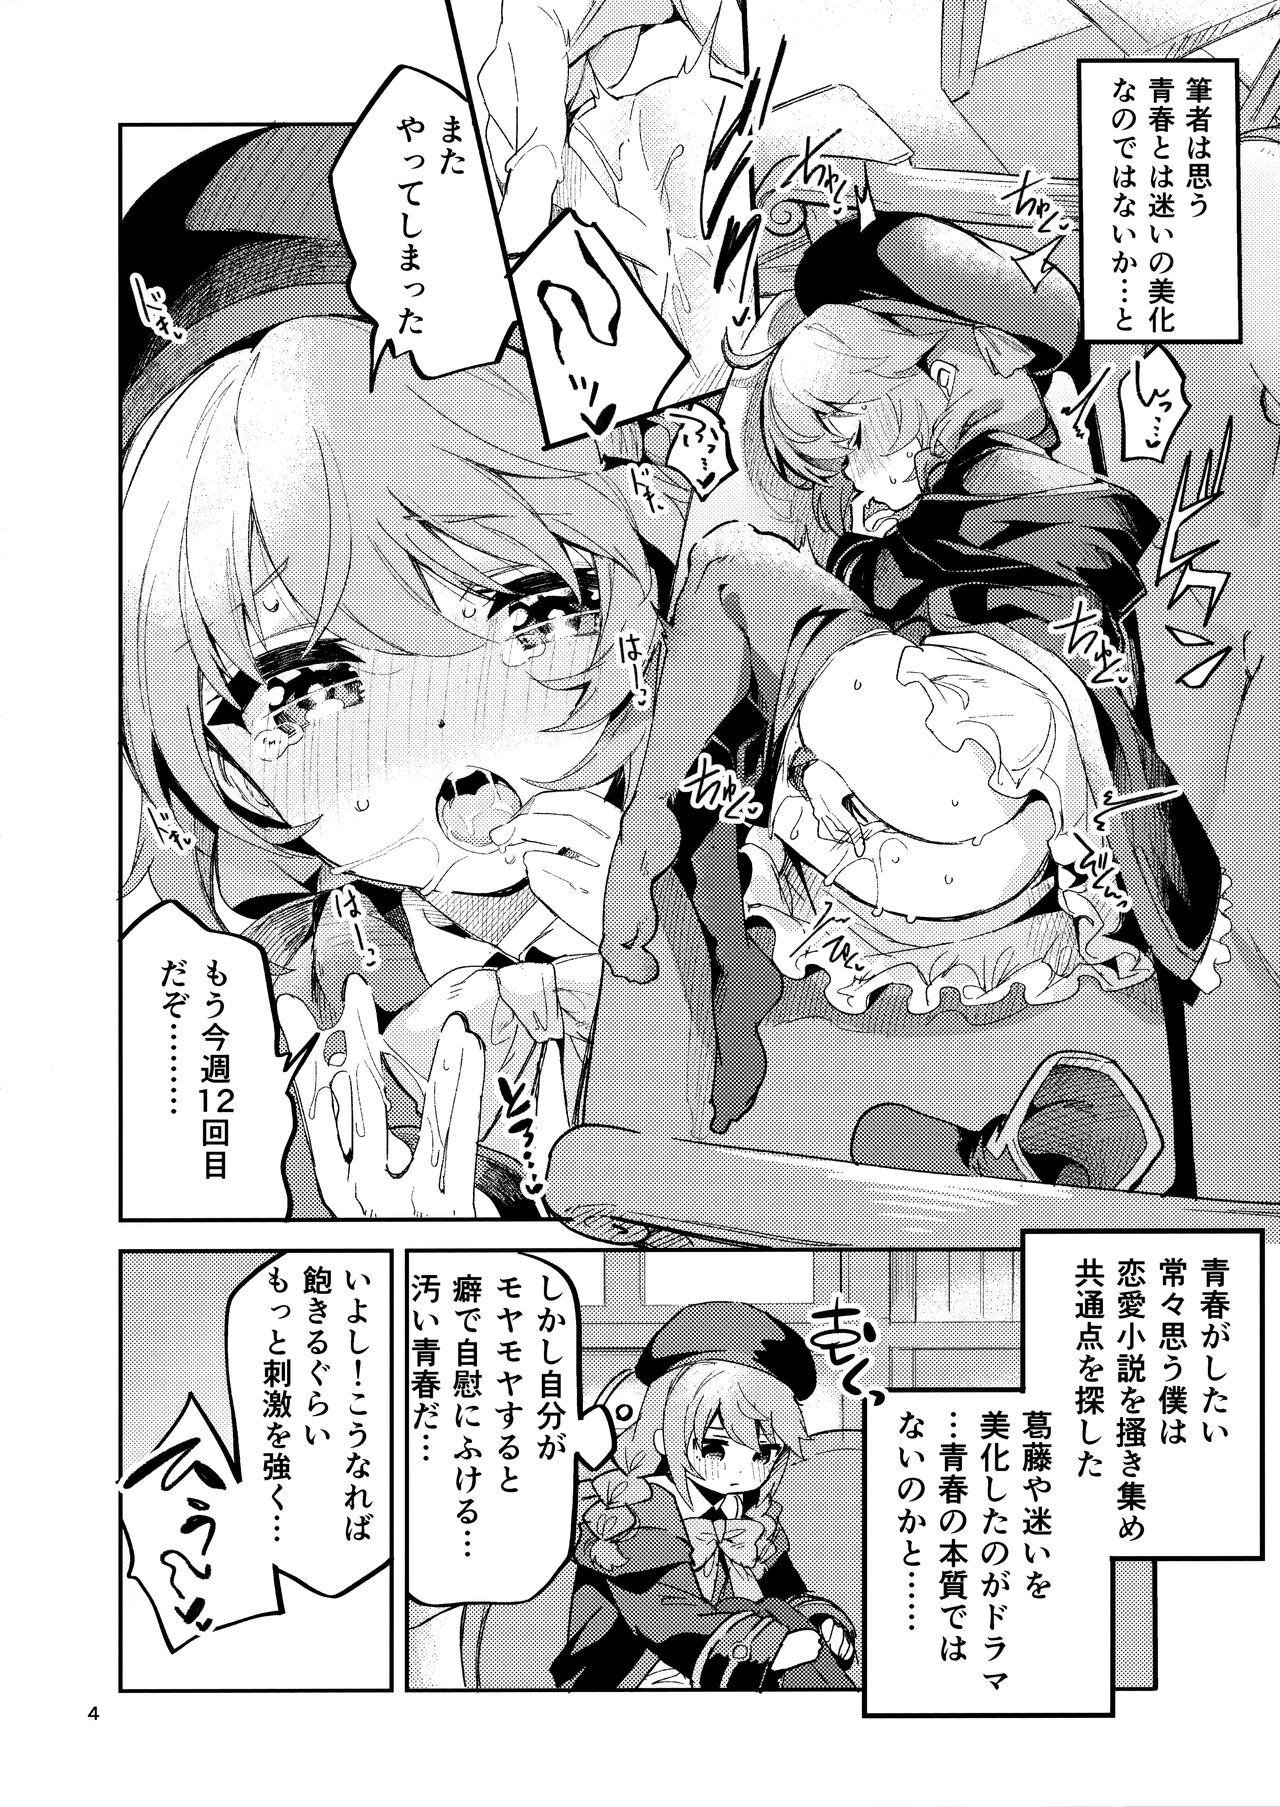 Club Seishun no Teigi - Princess connect Weird - Page 3